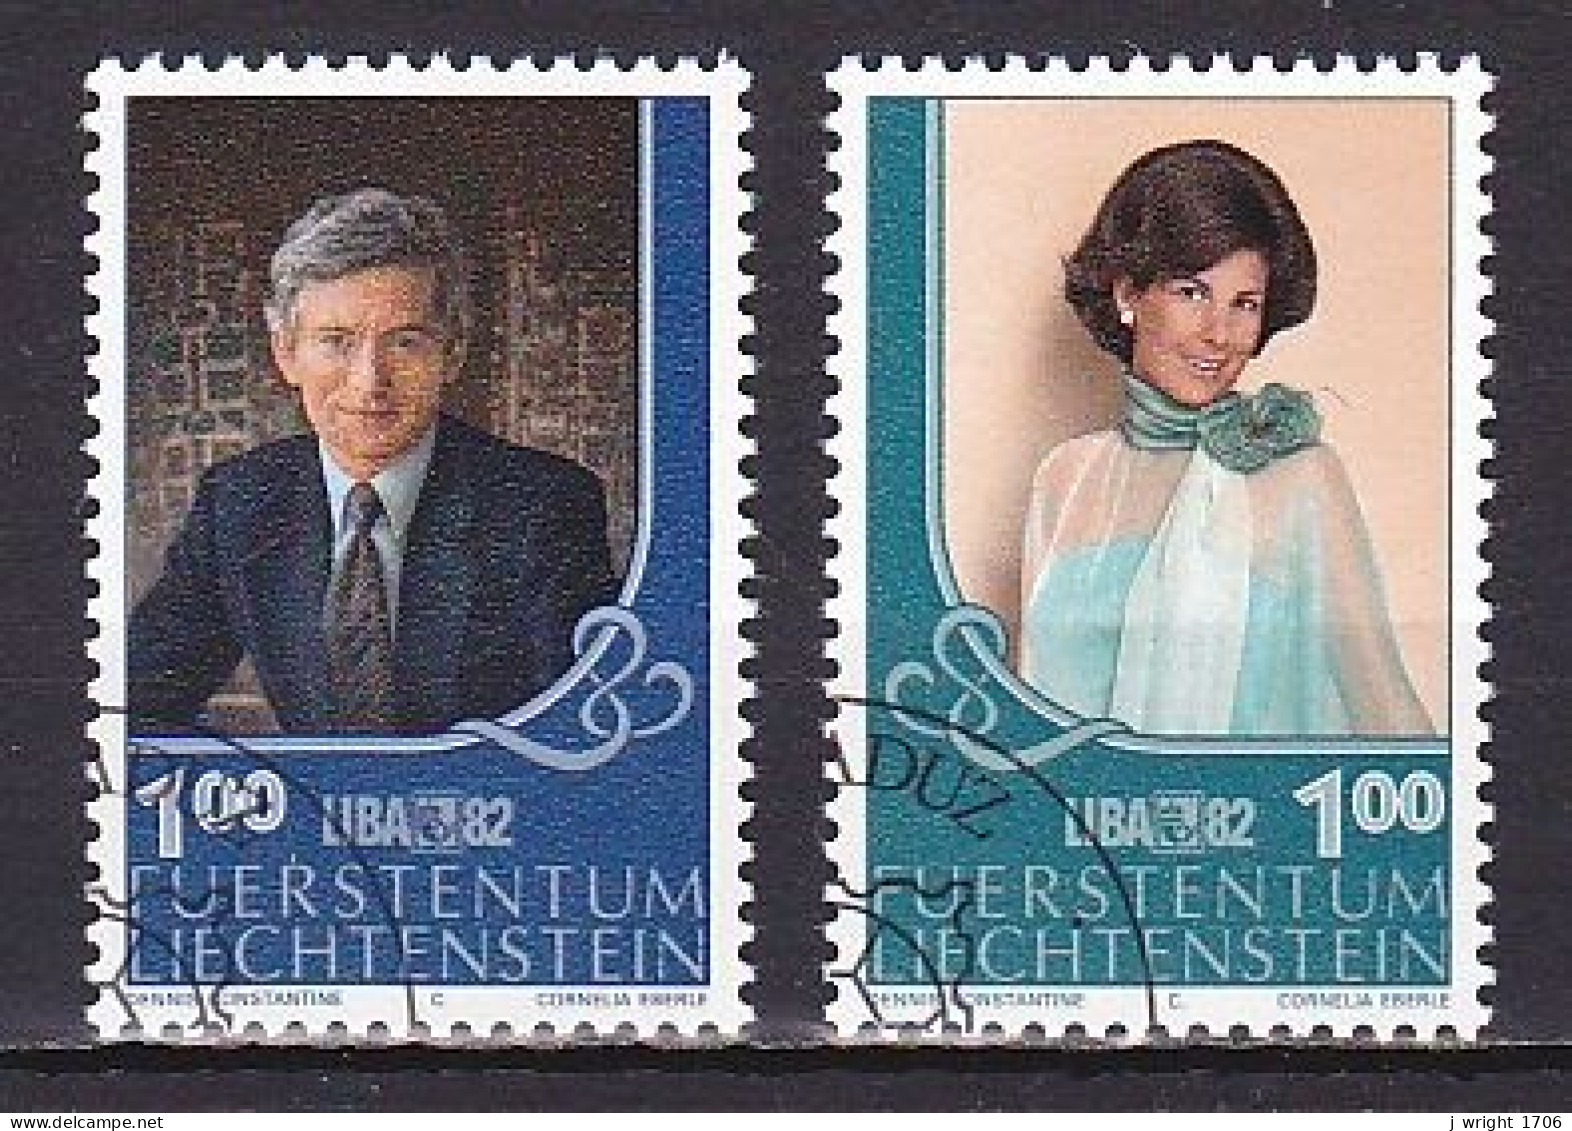 Liechtenstein, 1982, LIBA 82 Exhib, Set, CTO - Used Stamps